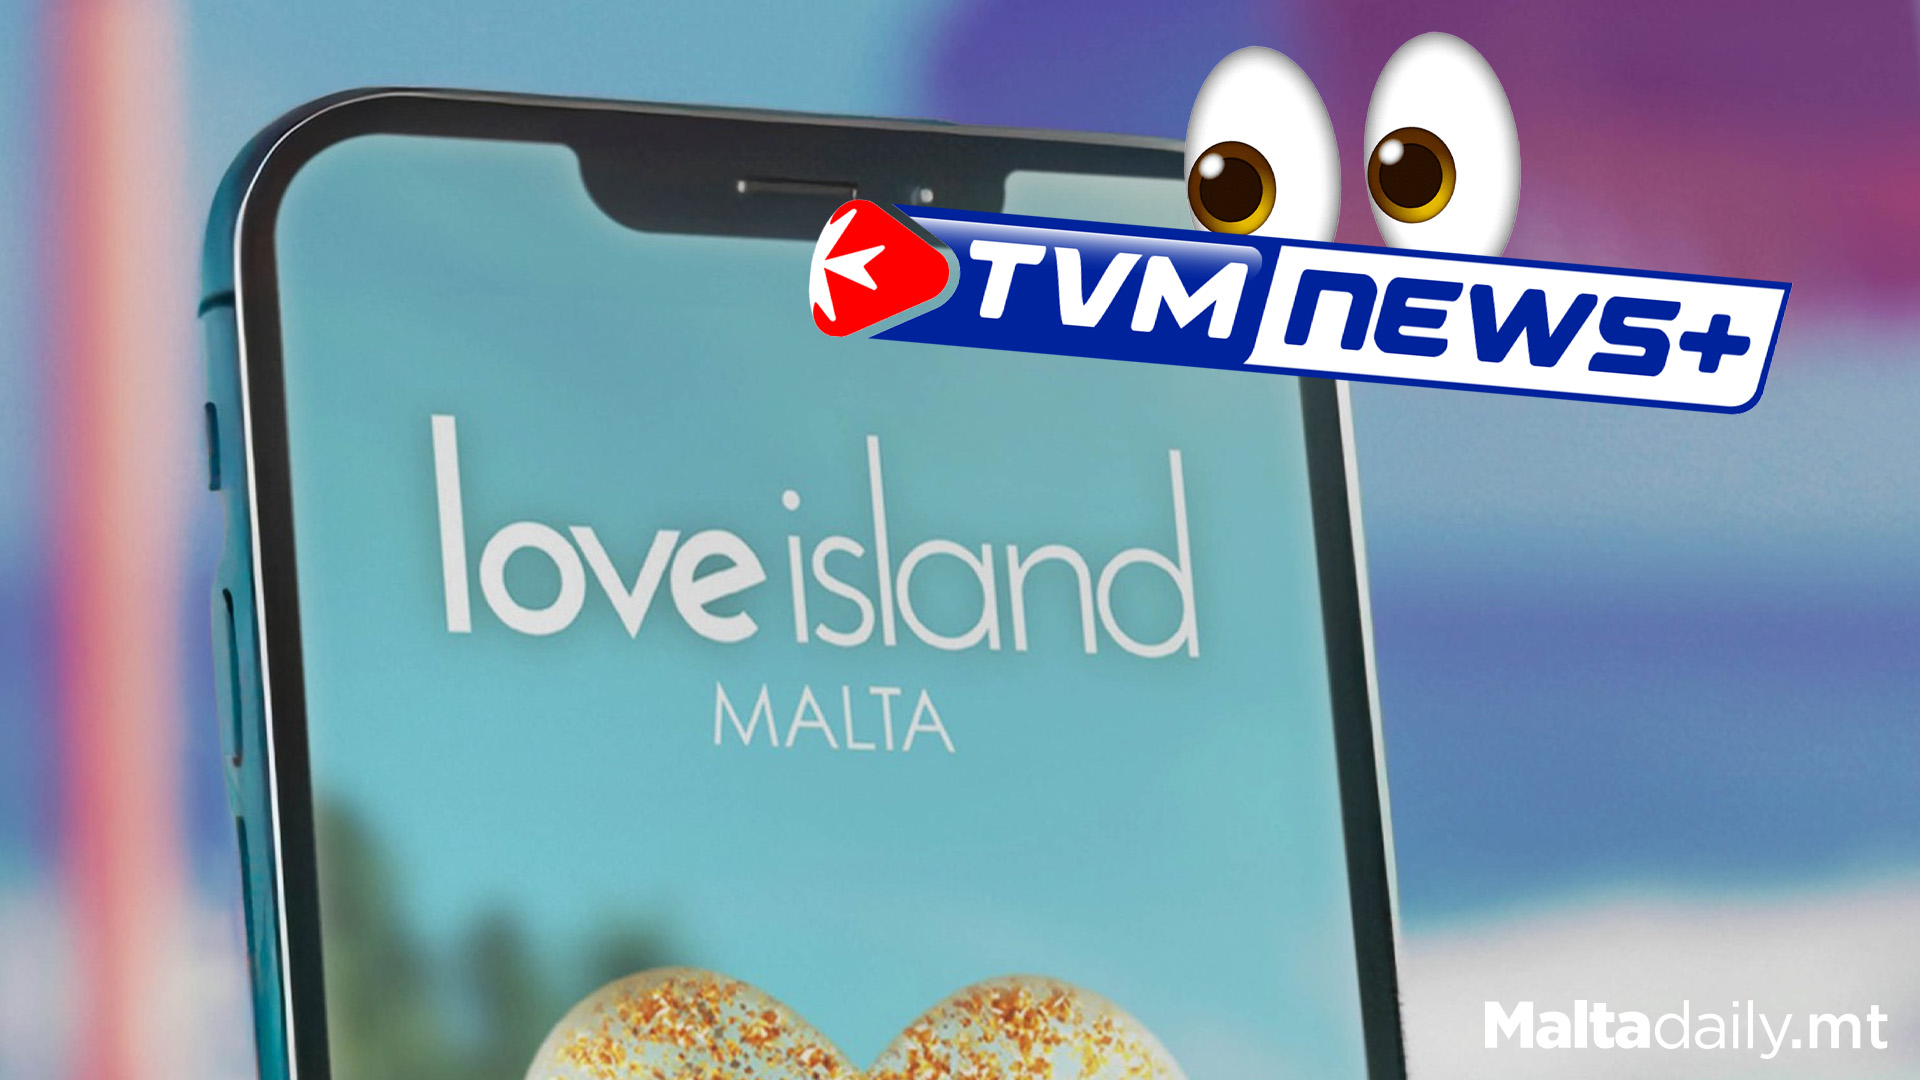 Tonight's Love Island Malta Episode To Air On TVM News+